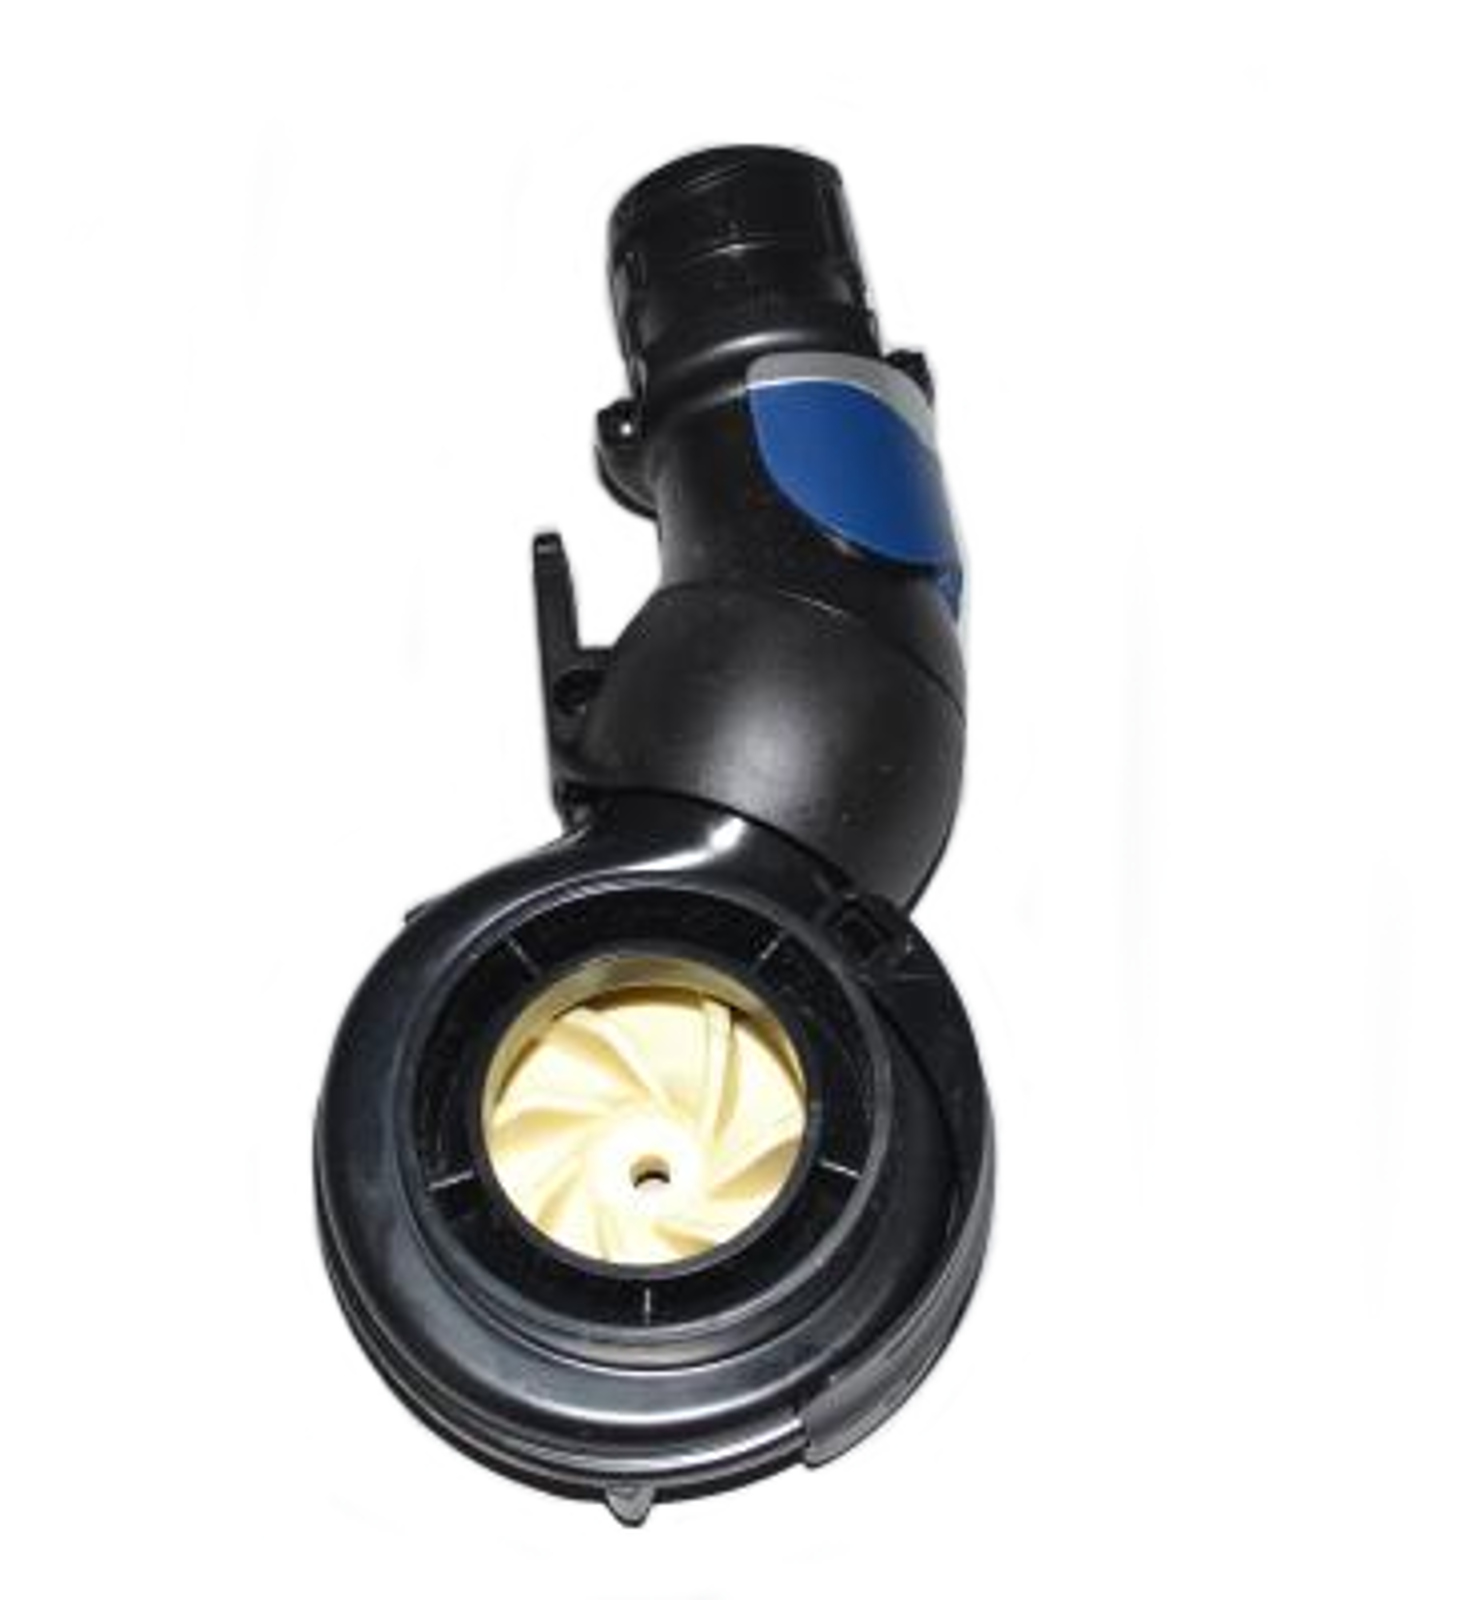 Oreck Magnesium LW1500 Vacuum Fan Replacement Kit 09-83223-01